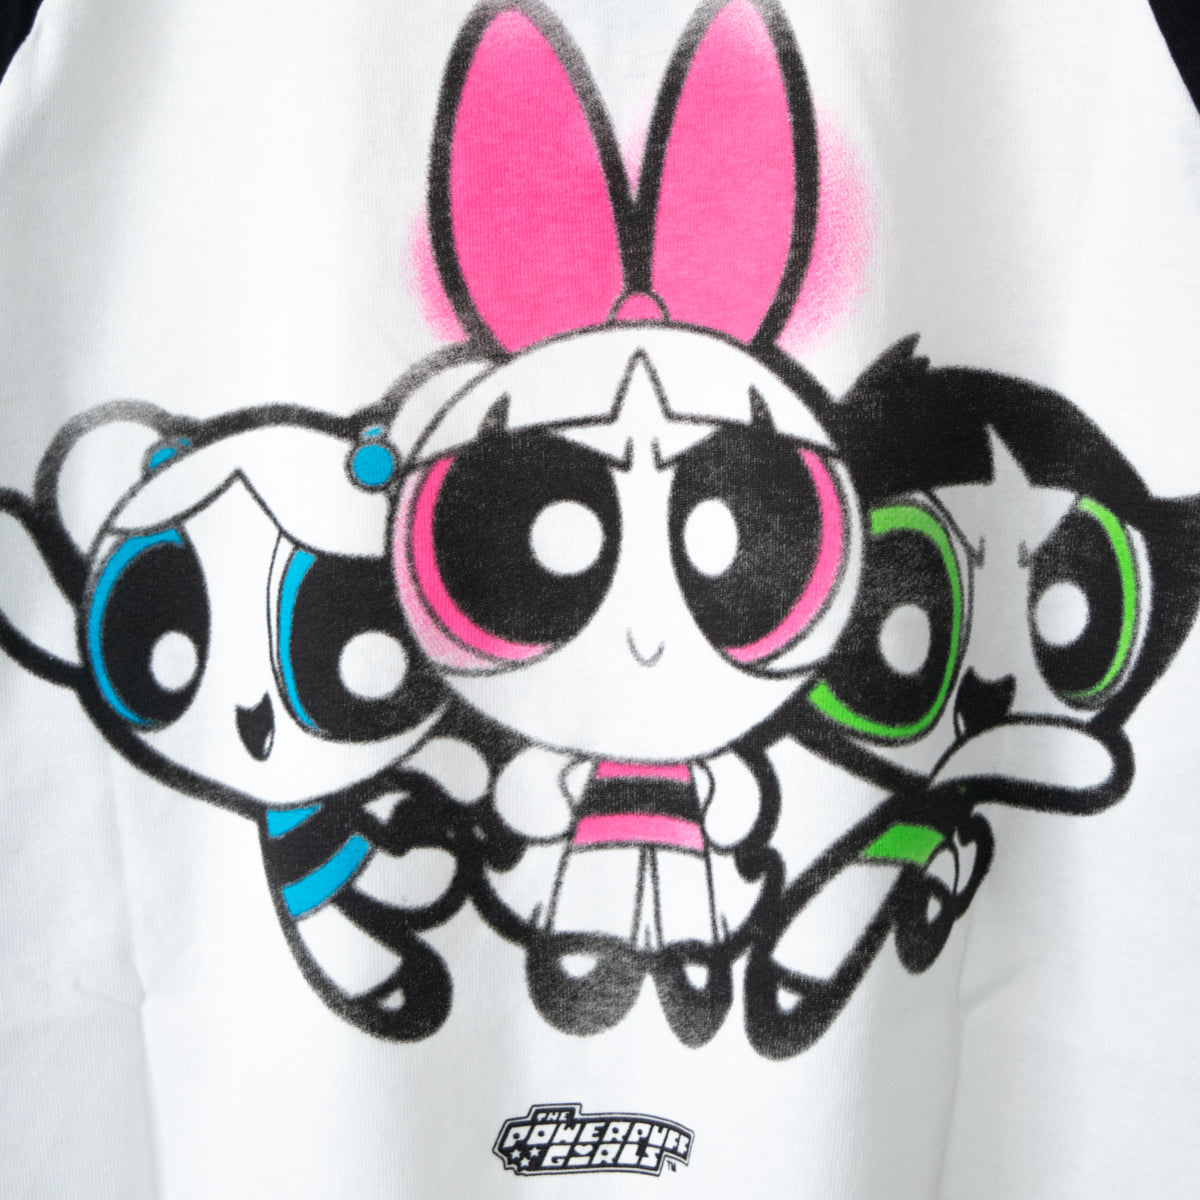 The Powerpuff Girls ラグラン Tシャツ ショート丈 WHITE/BLACK